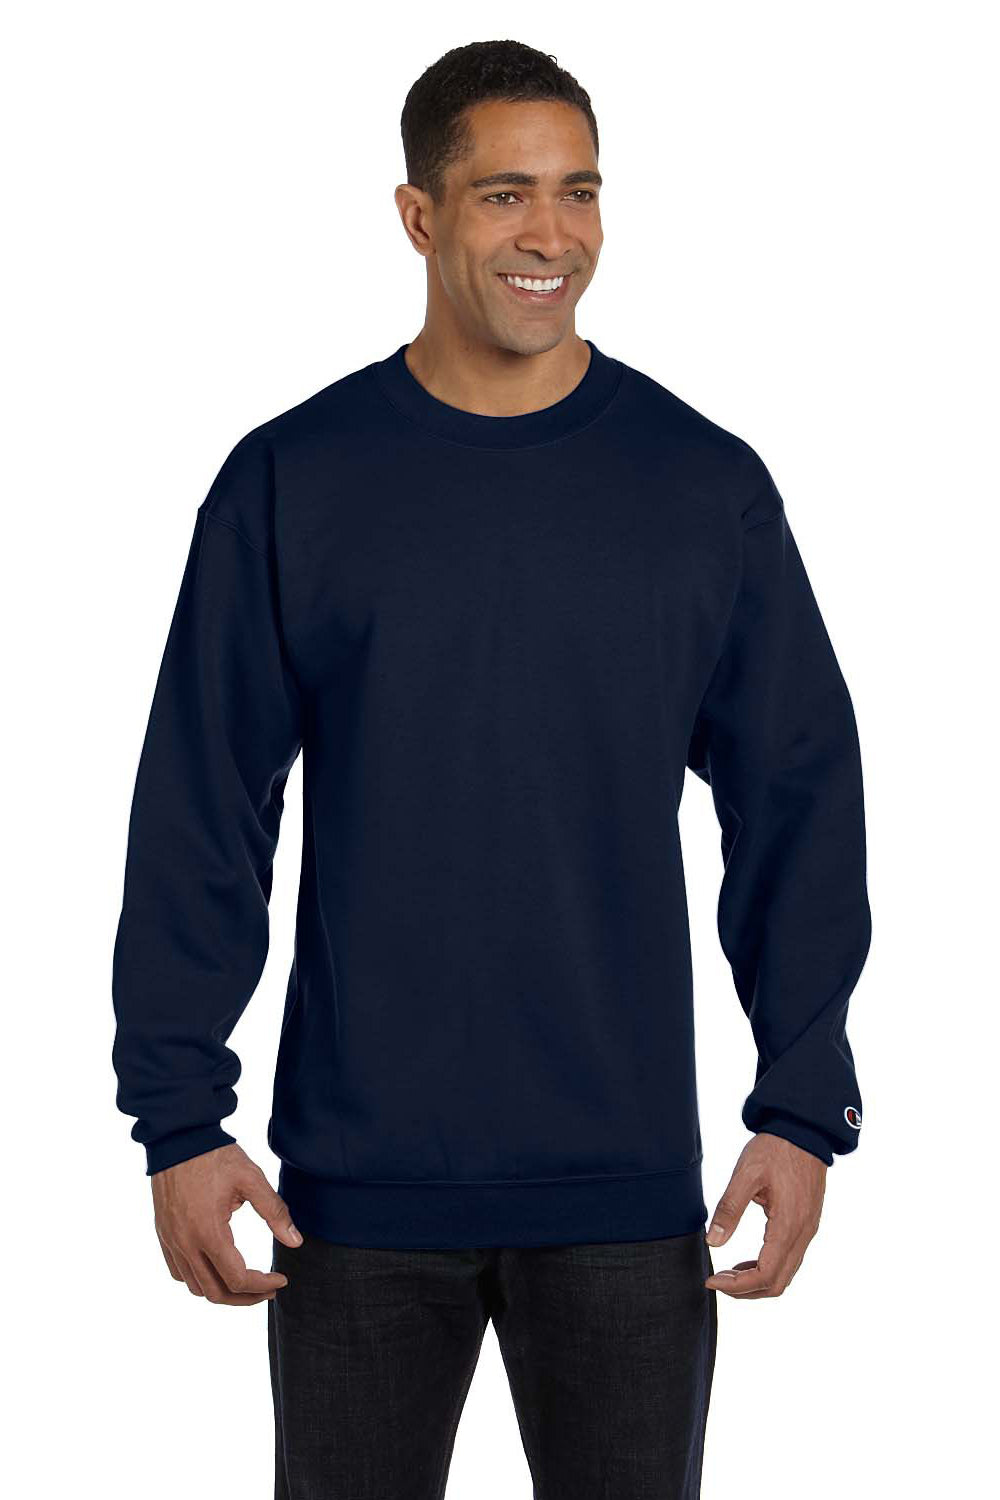 Champion Dry Moisture Crewneck Eco Mens — S6000/S600 Wicking Blue Double Navy Sweatshirt Fleece